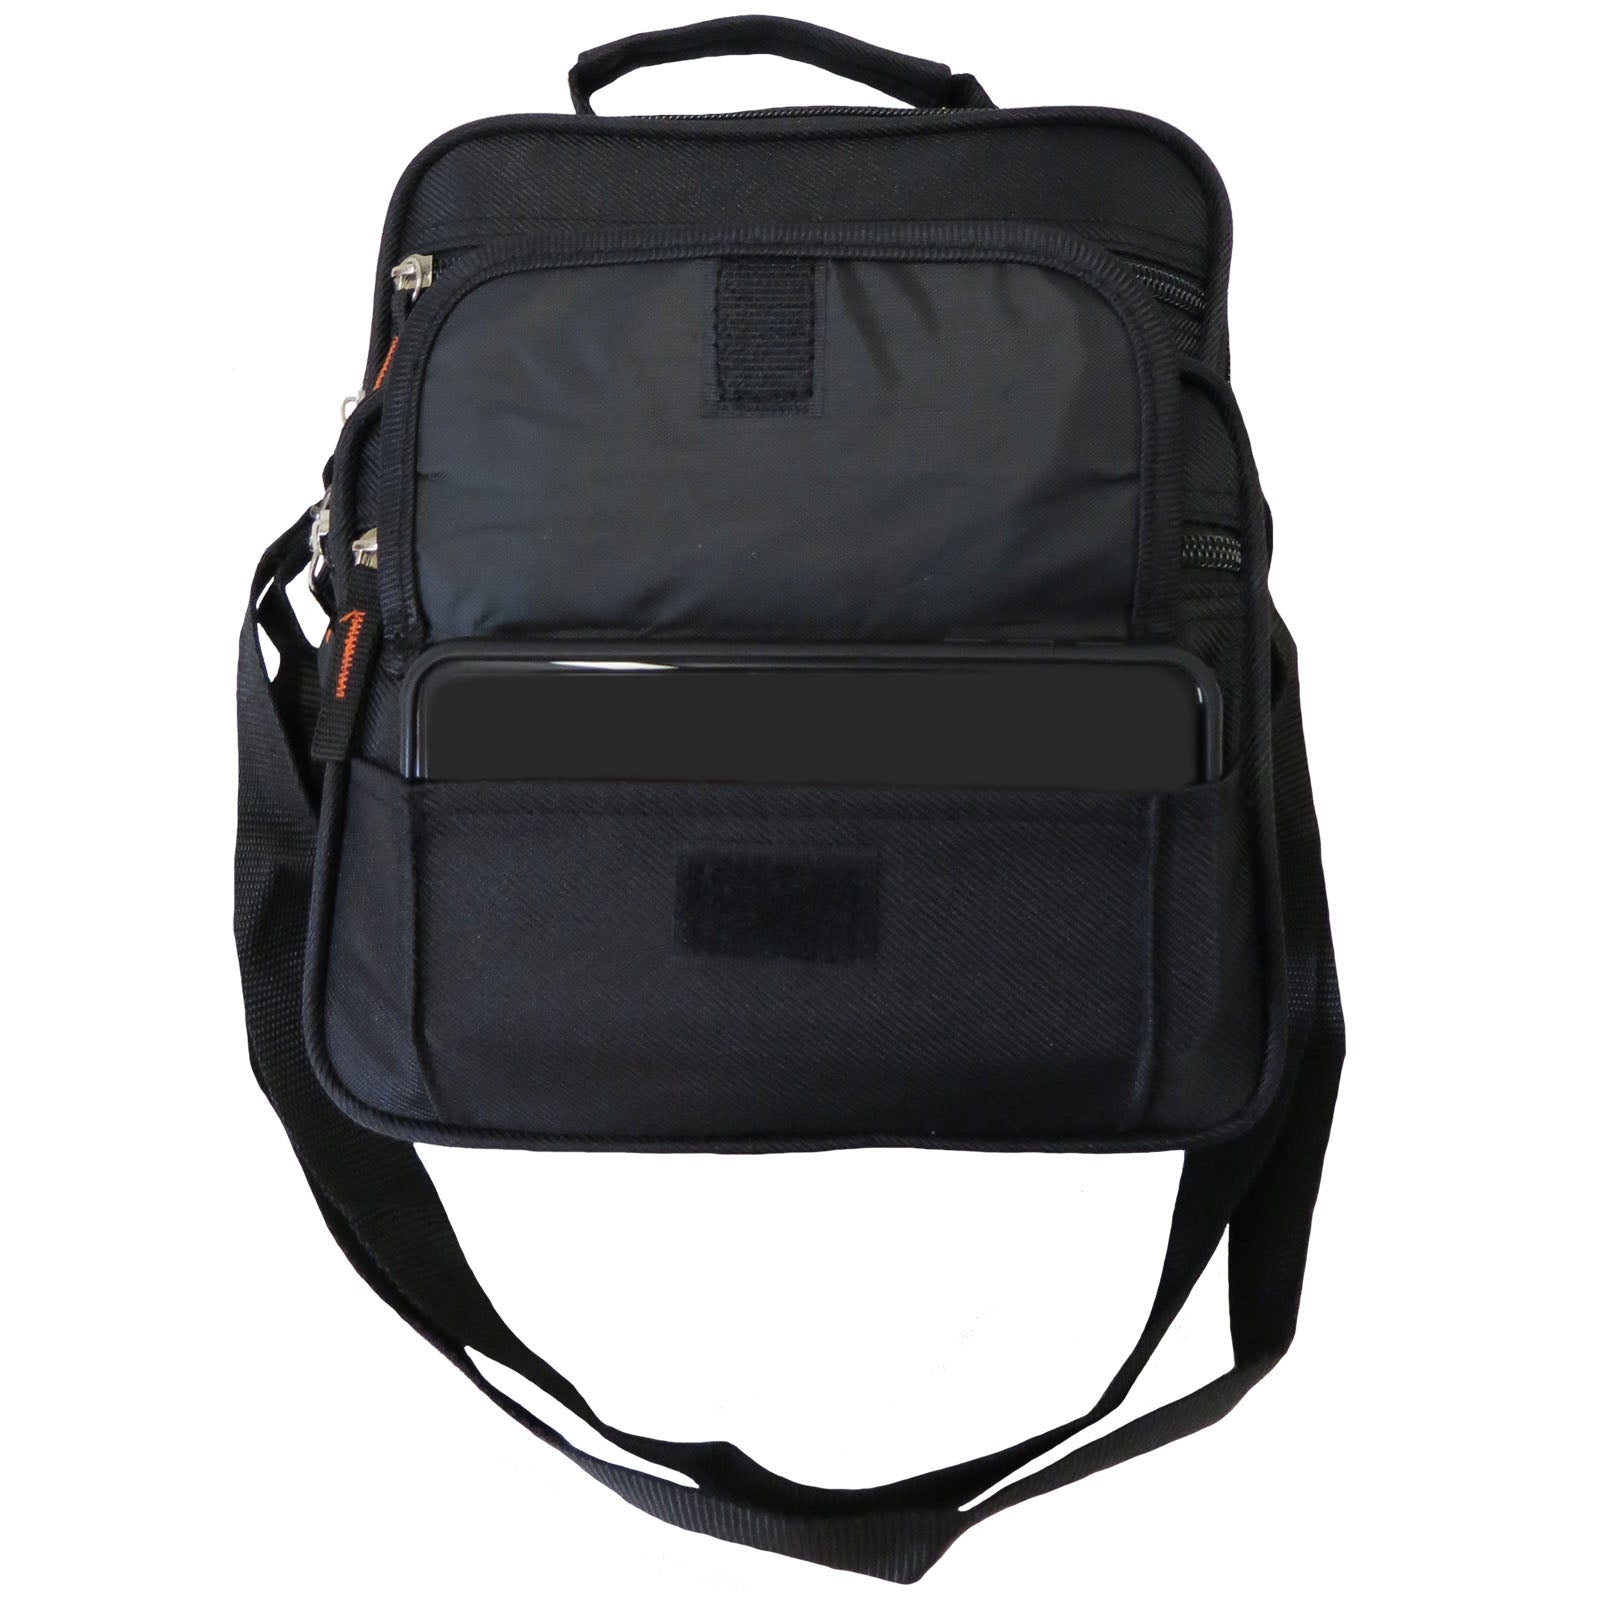 Wholesale Messenger Bag in Black with Phone Pocket - Alessa Brett